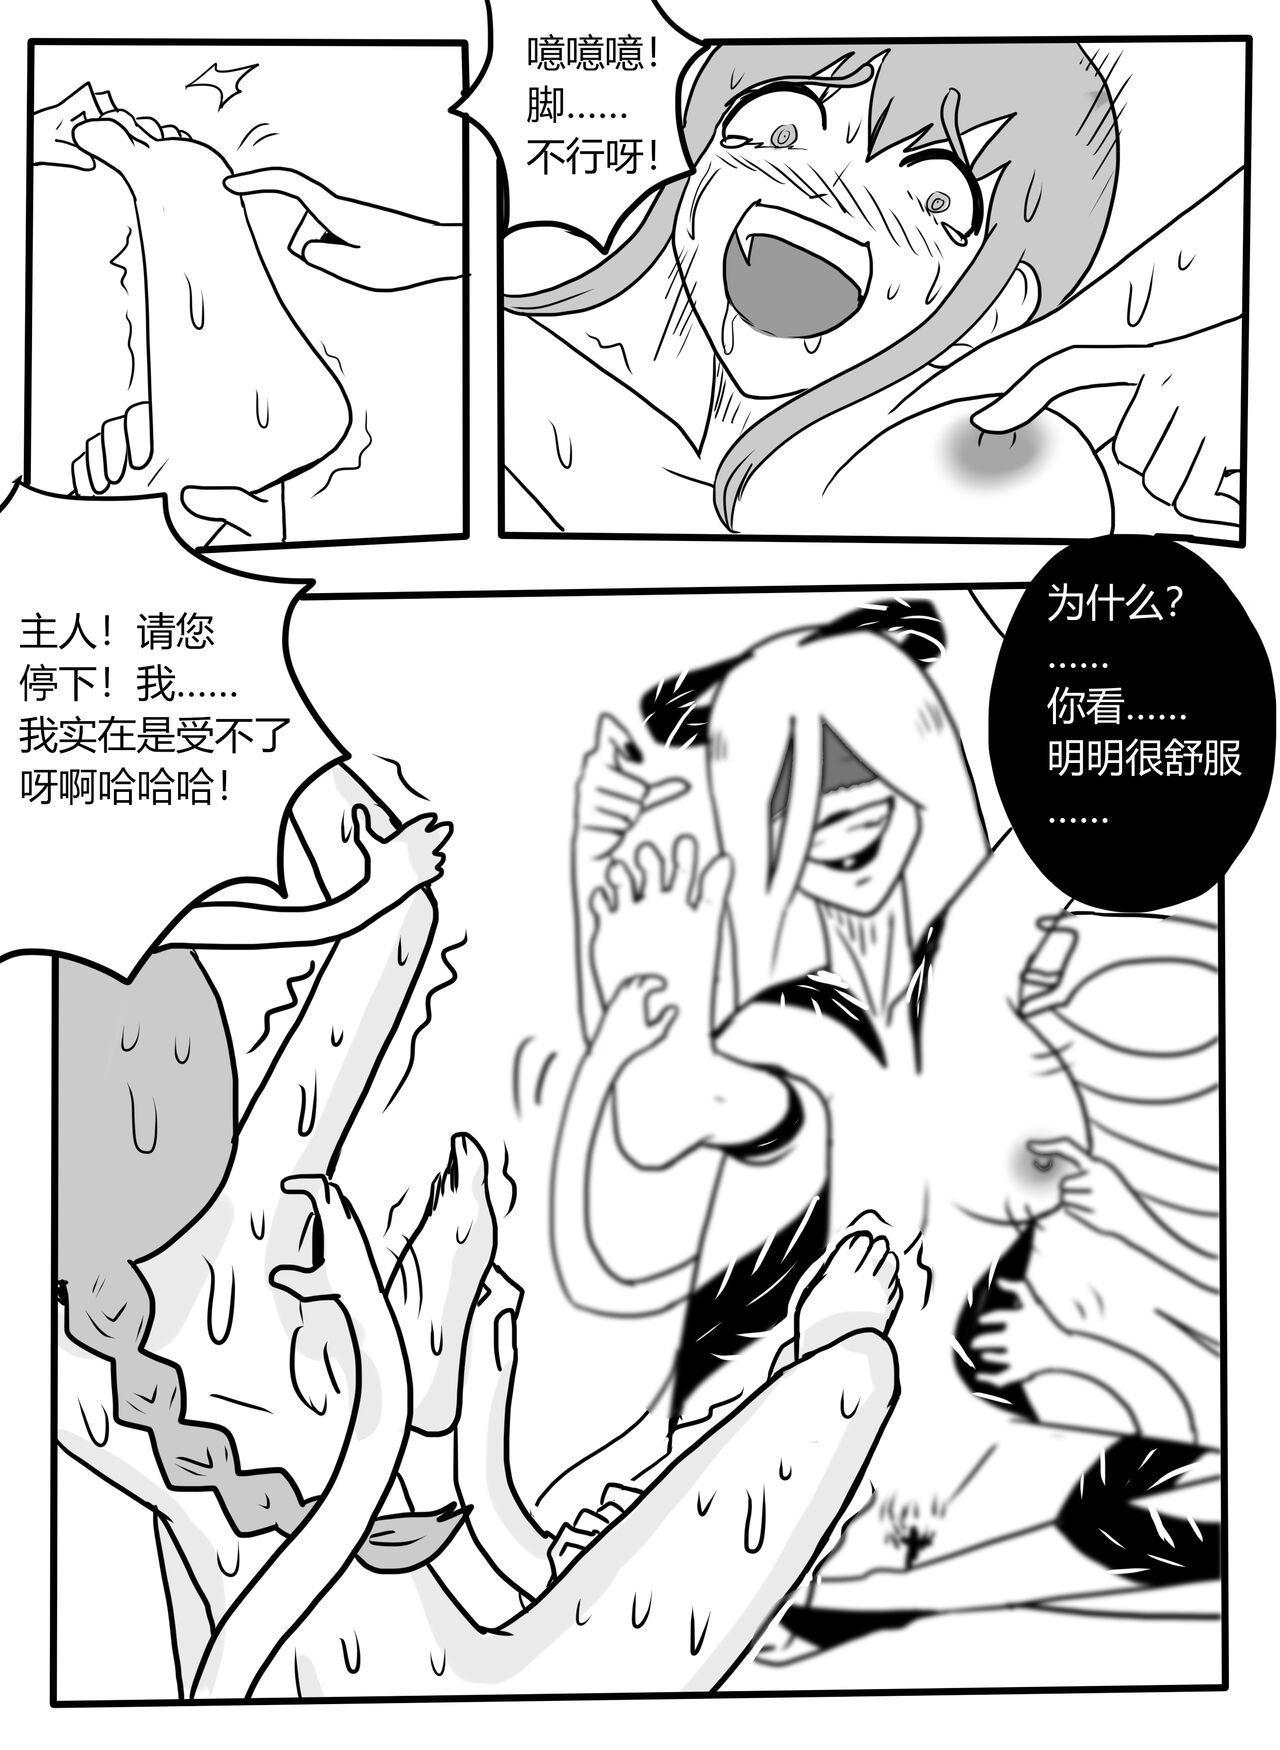 Metendo Makima tk manga - Chainsaw man Spying - Page 11